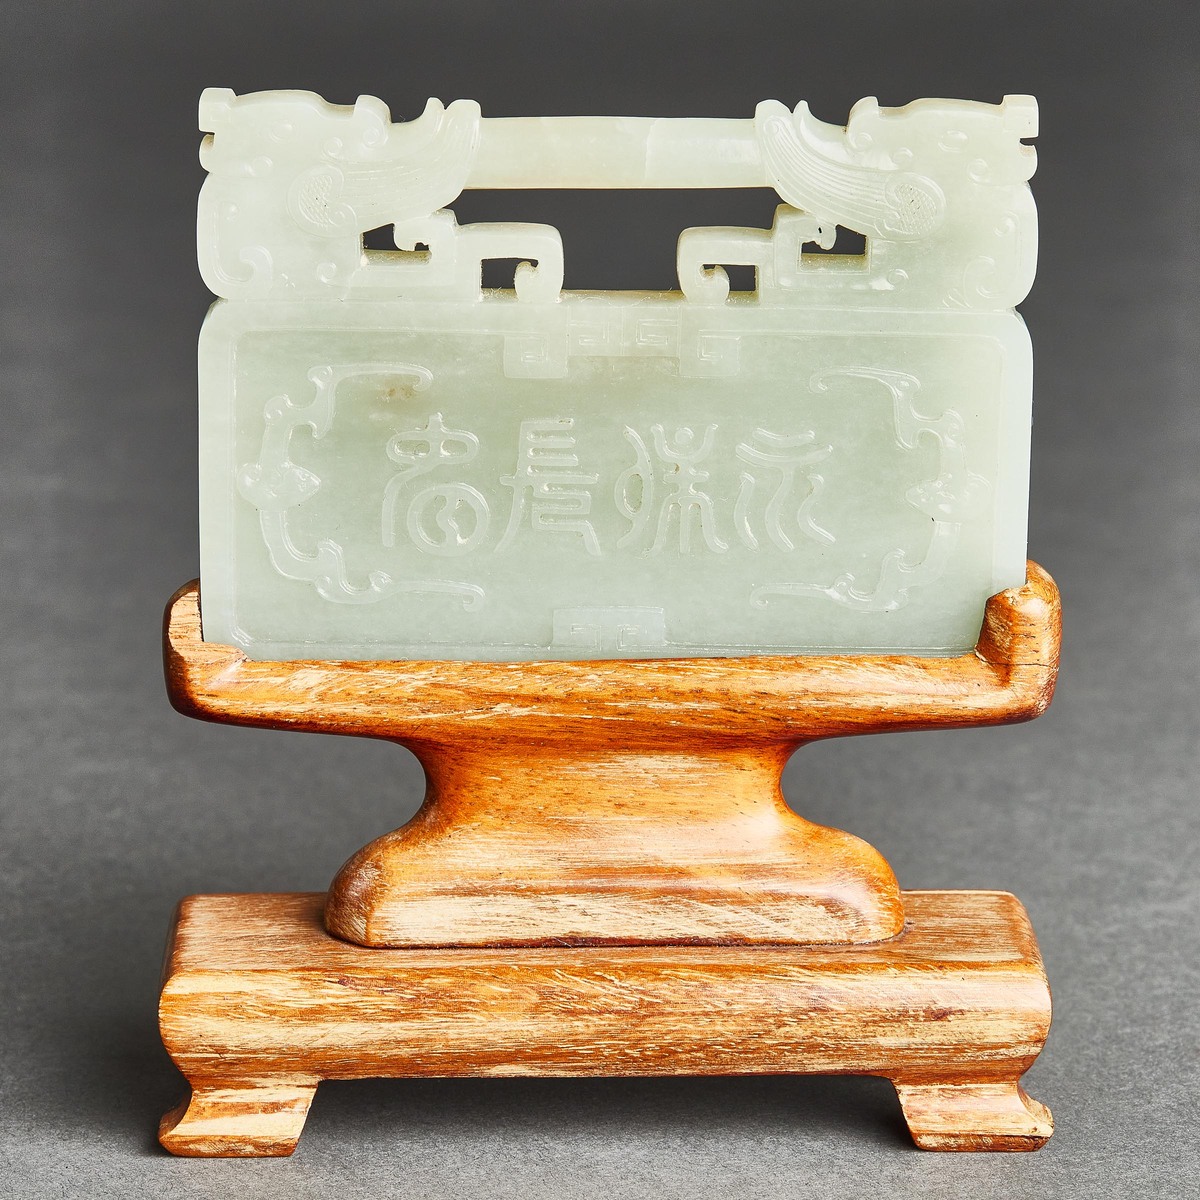 A Pale Celadon Jade Lock-Form 'Yong Bao Chang Chun' Plaque, 19th Century, 清 十九世纪 青白玉雕'永保长春'锁形牌桌屏, 玉牌